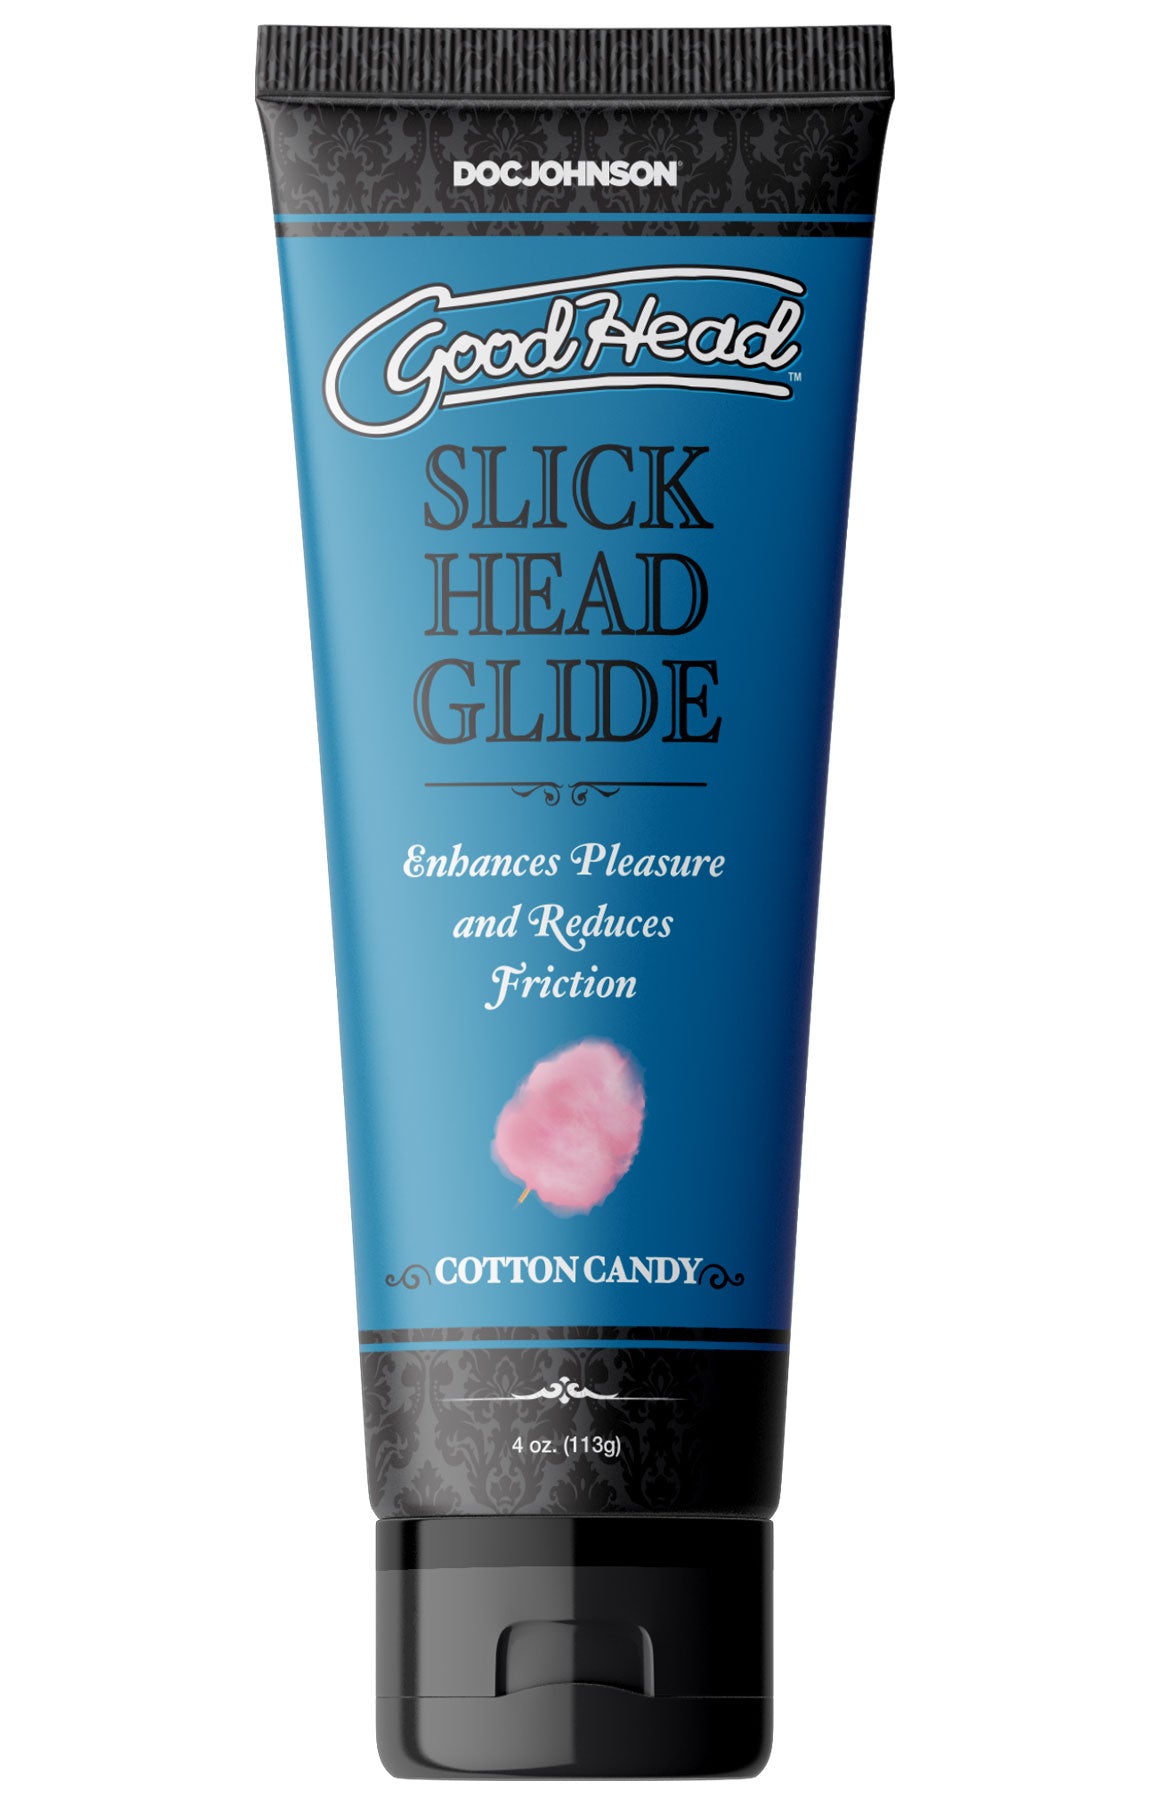 Goodhead - Slick Head Glide - Cotton Candy - 4 Oz.-0